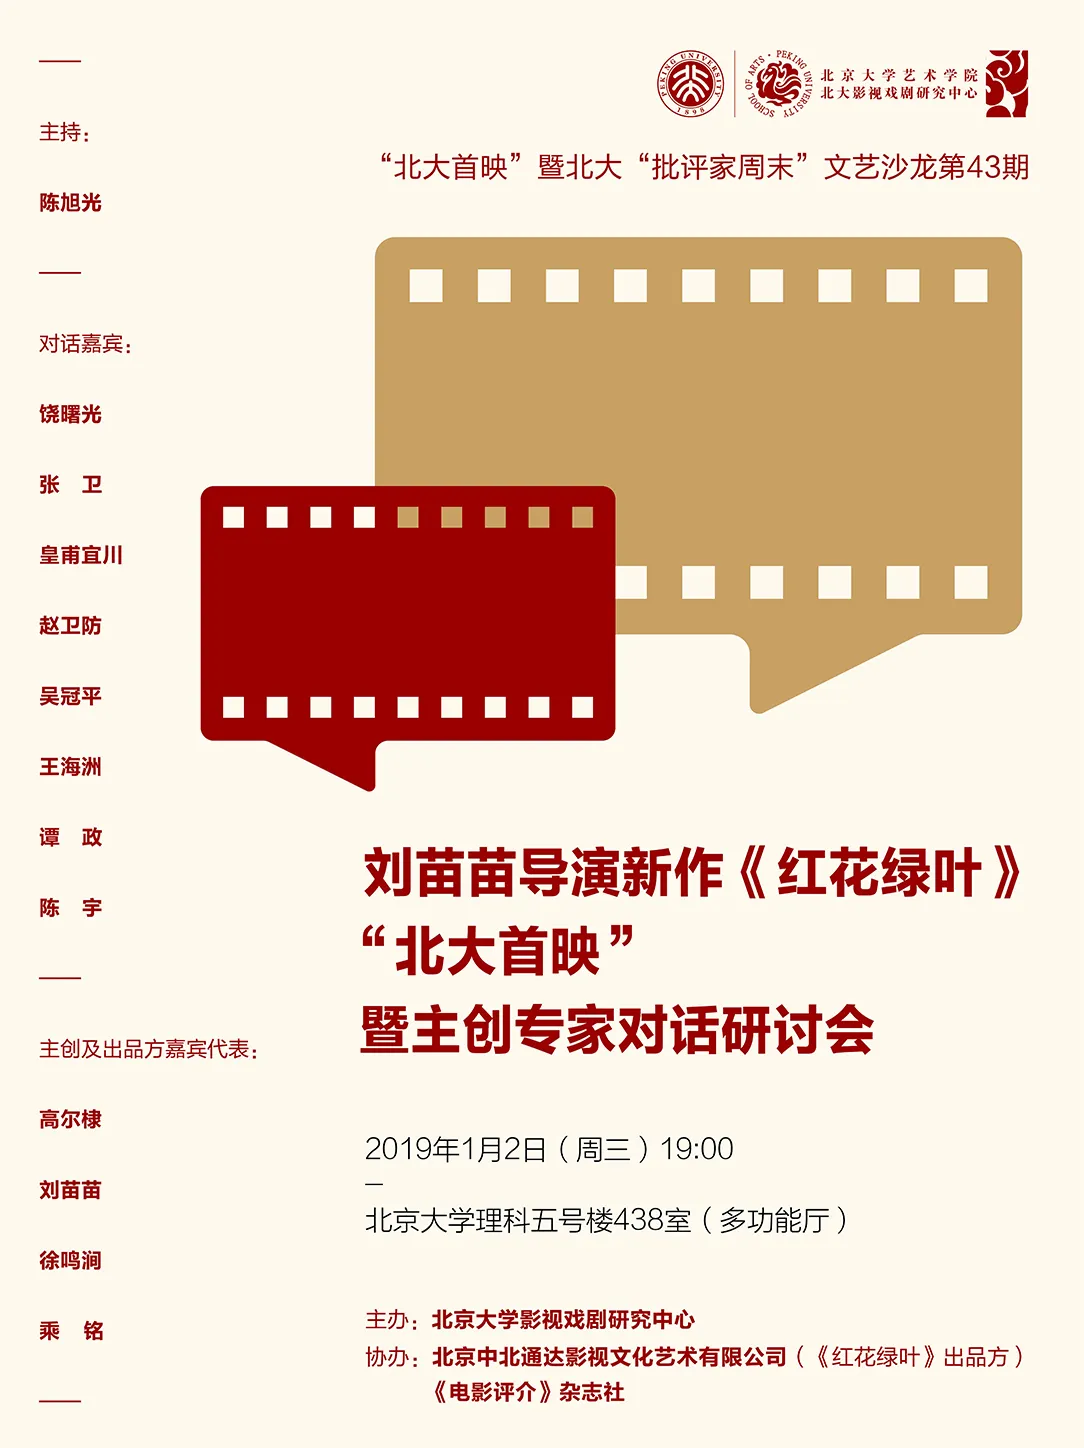  Liu Miaomiao (director) 导演《红花绿叶》北大首映海报.jpg